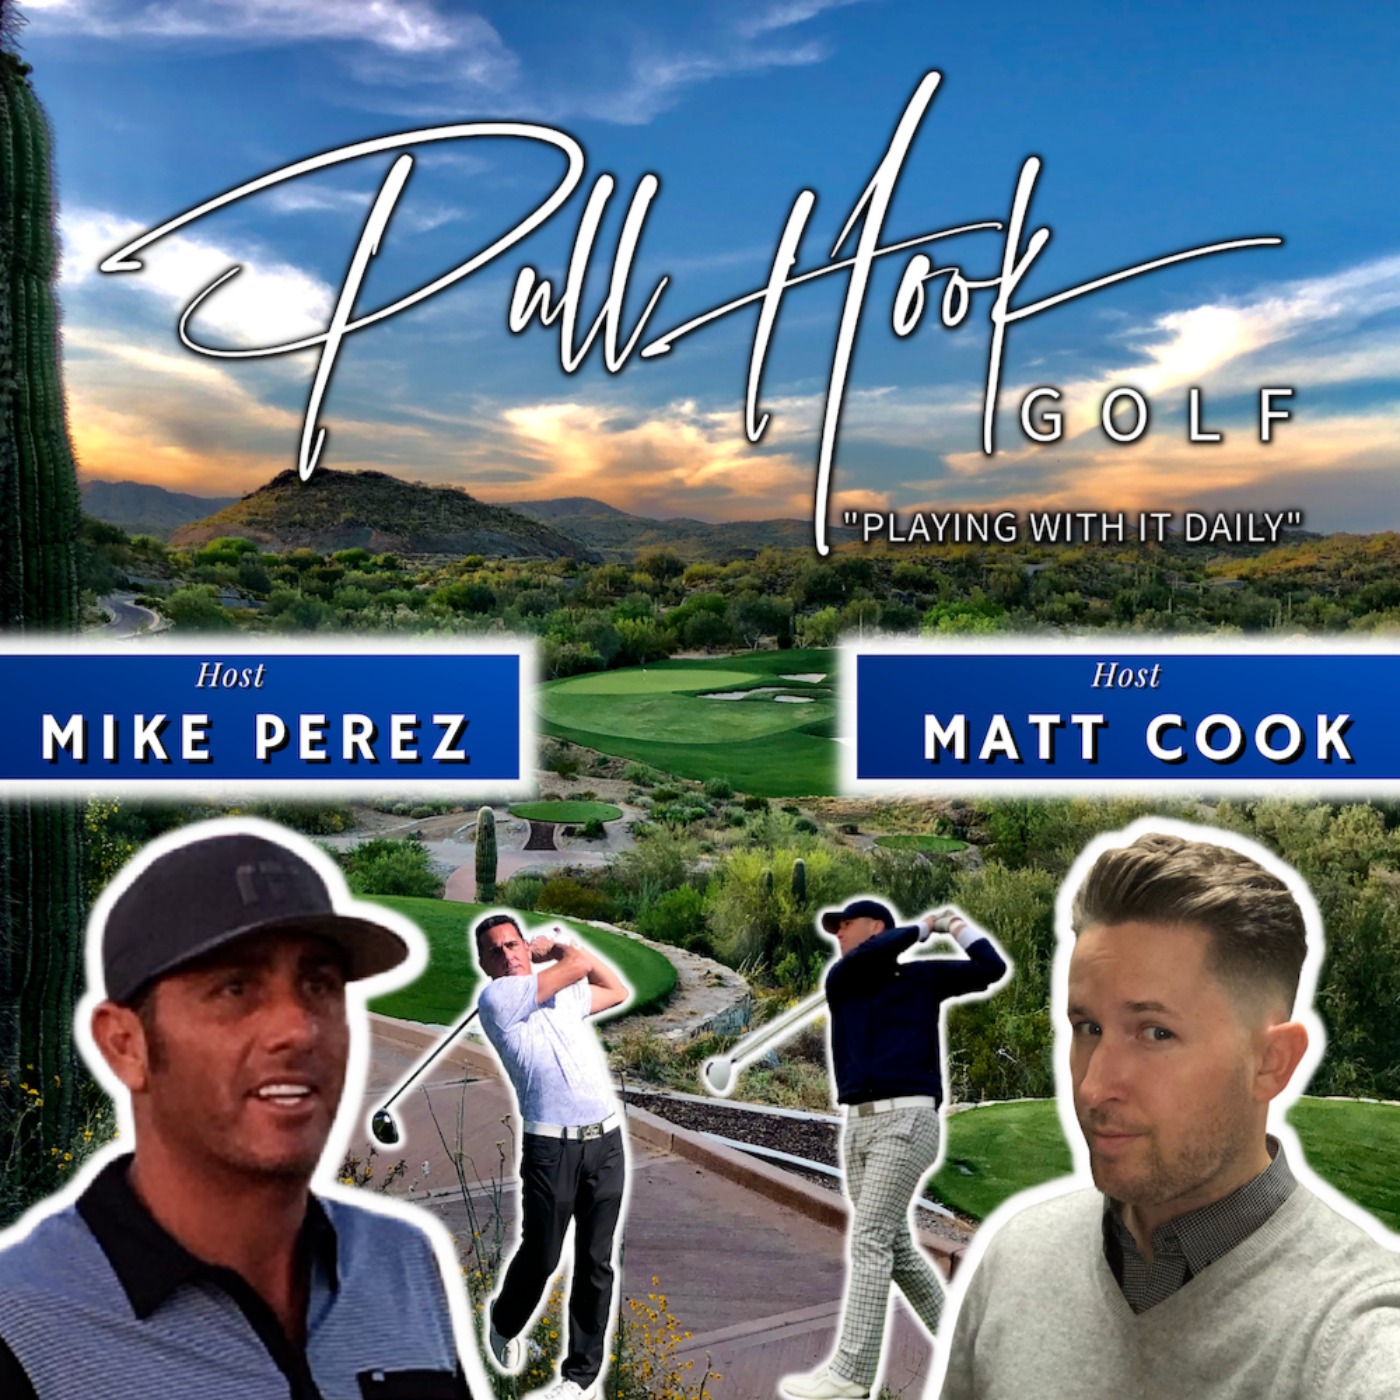 Pull Hook Golf art image